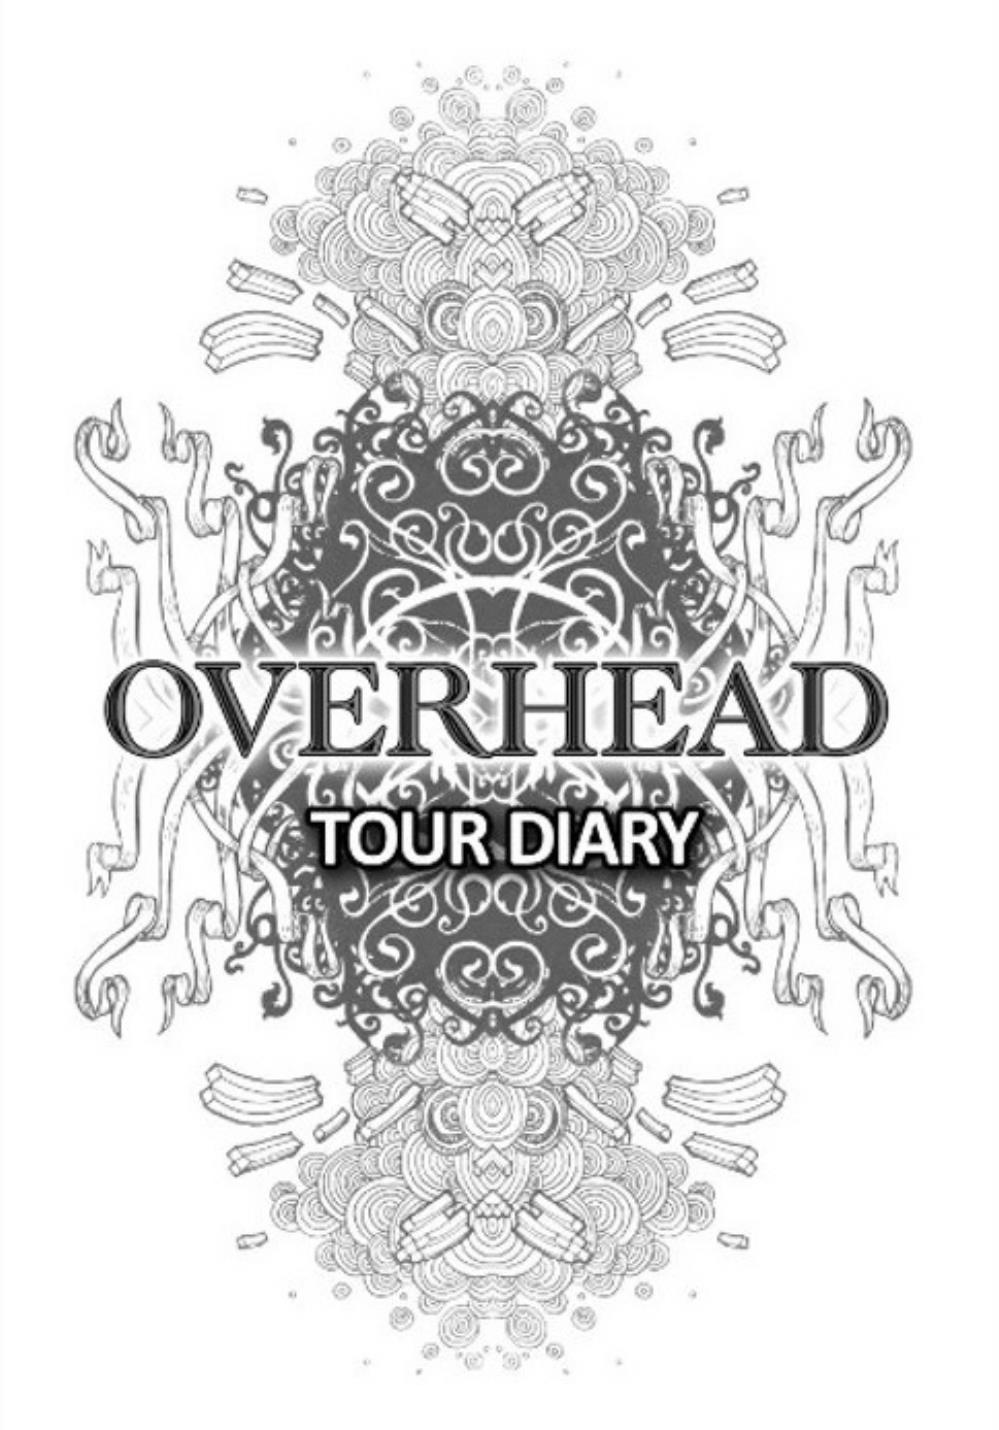 Overhead Tour Diary album cover